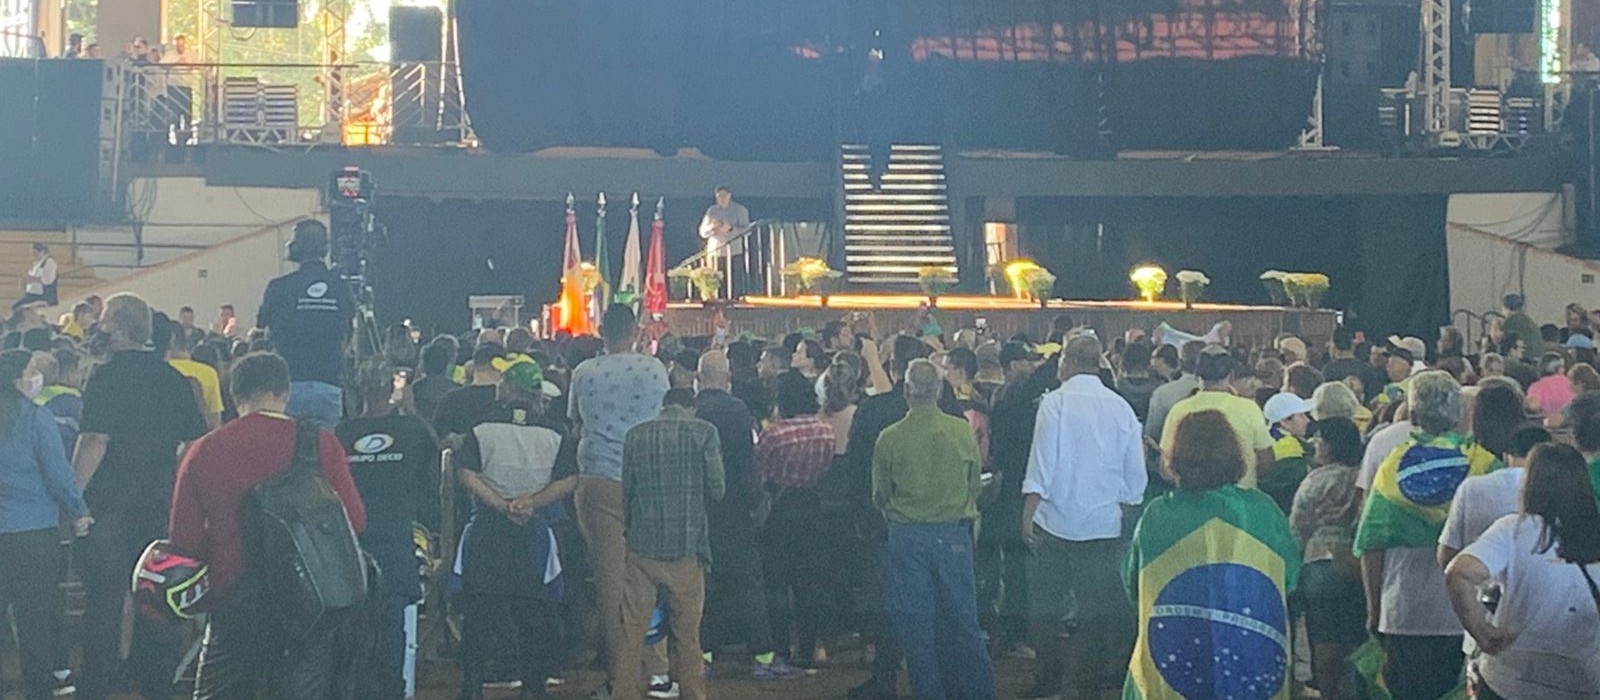 Expectativa na arena coberta para a chega do presidente Bolsonaro na Expoingá